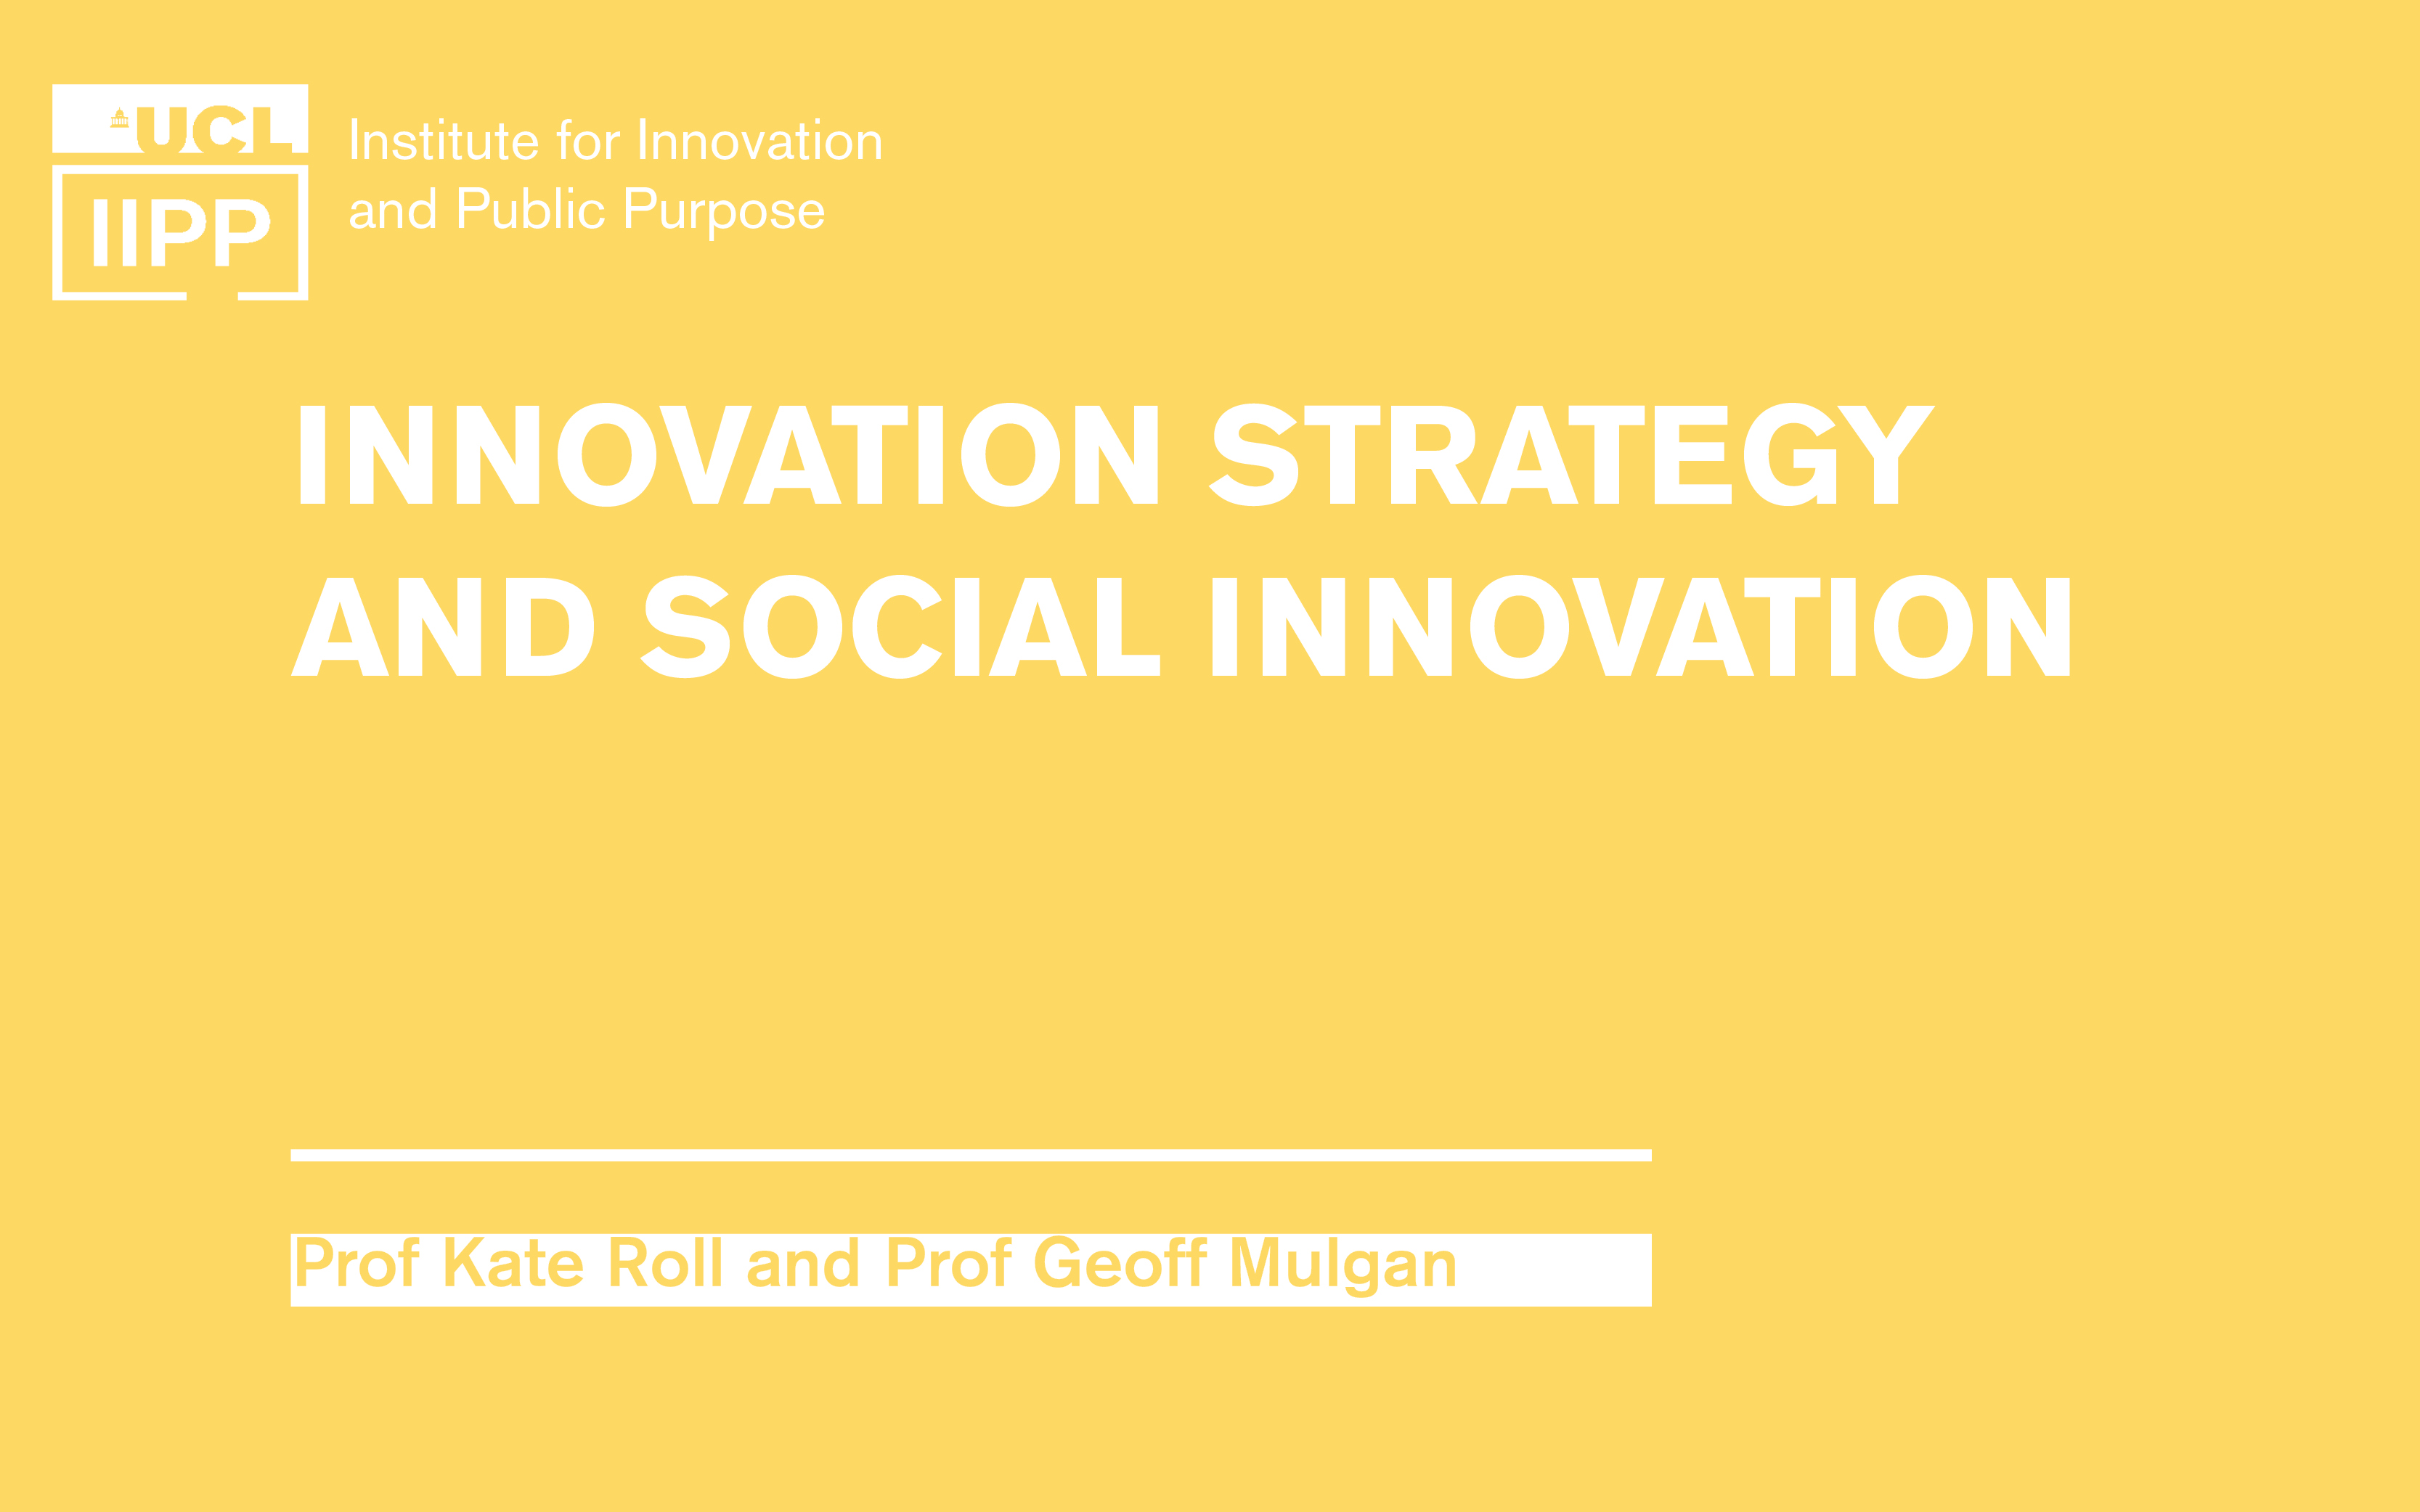 Innovation strategy and social innovation